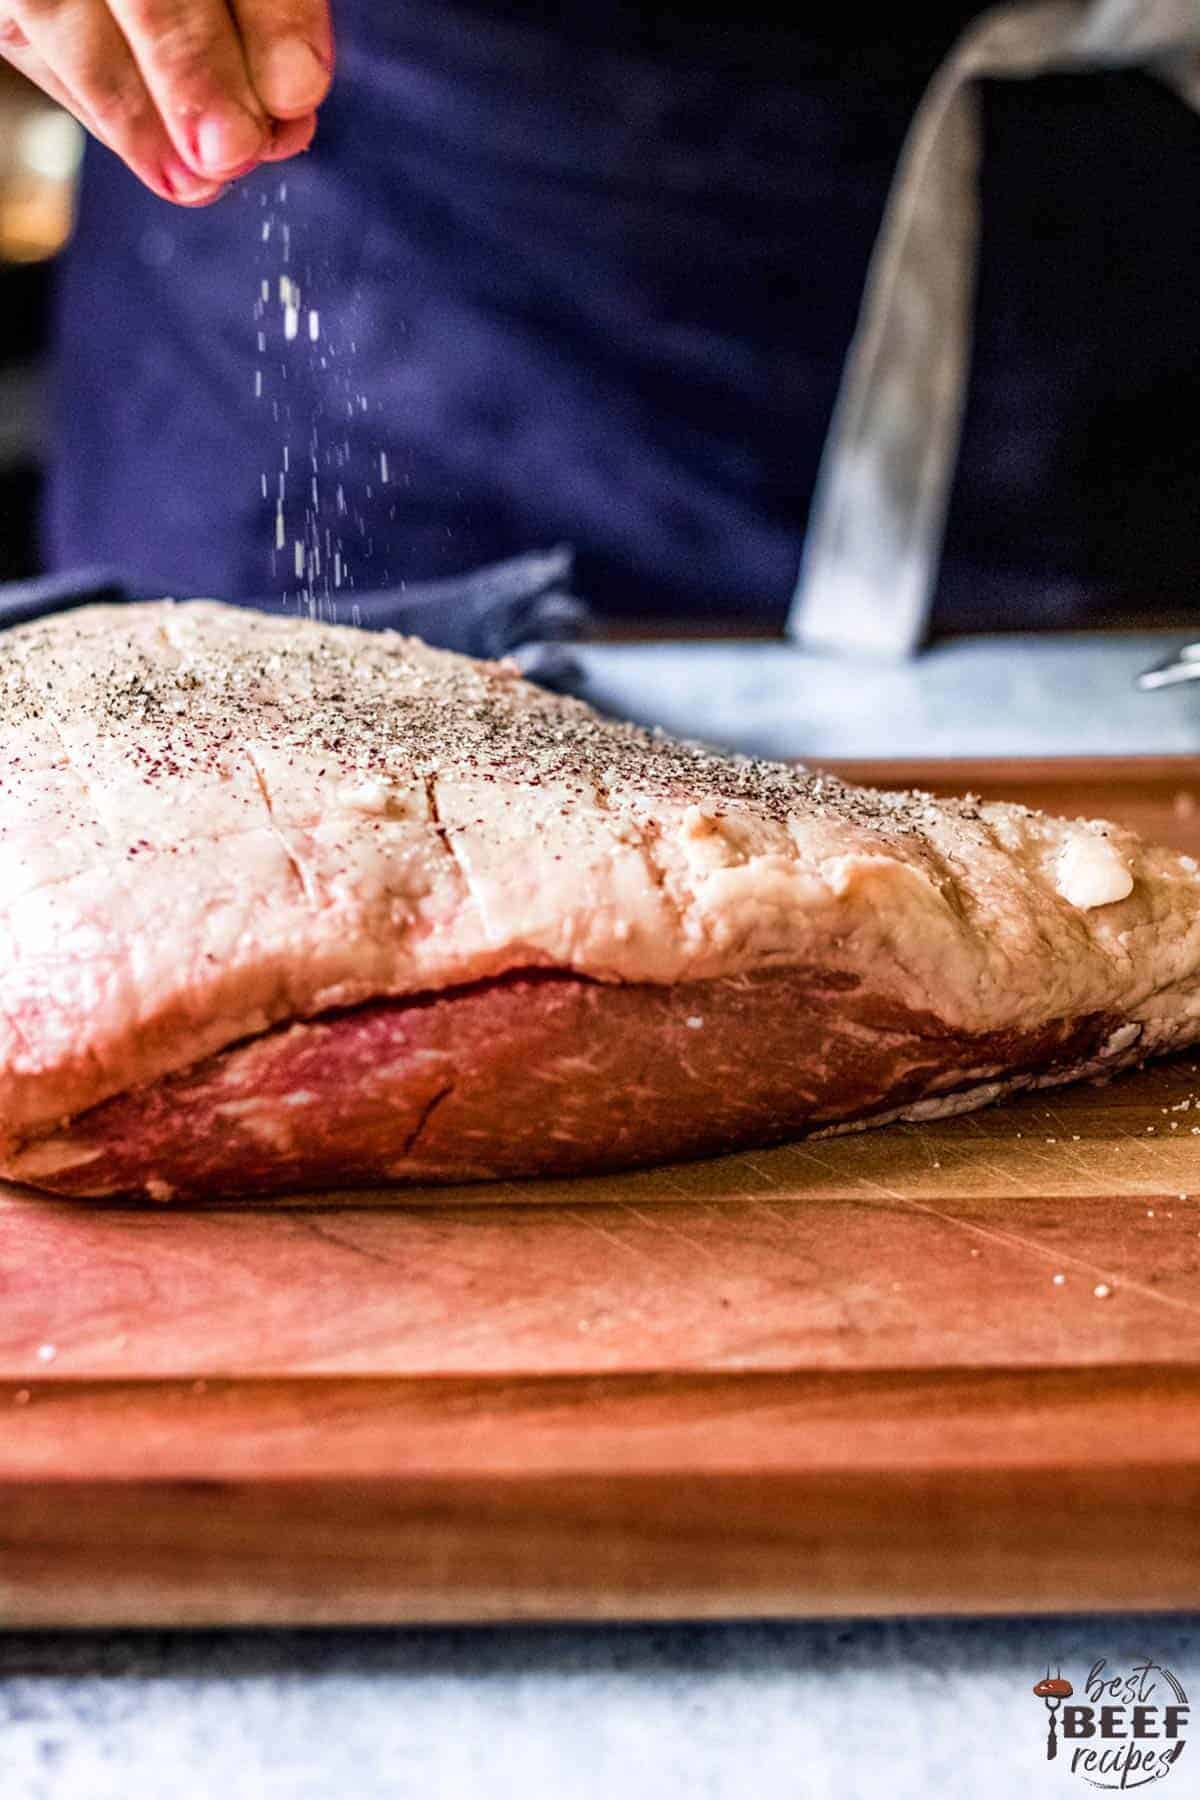 Seasoning the fat cap of picanha steak